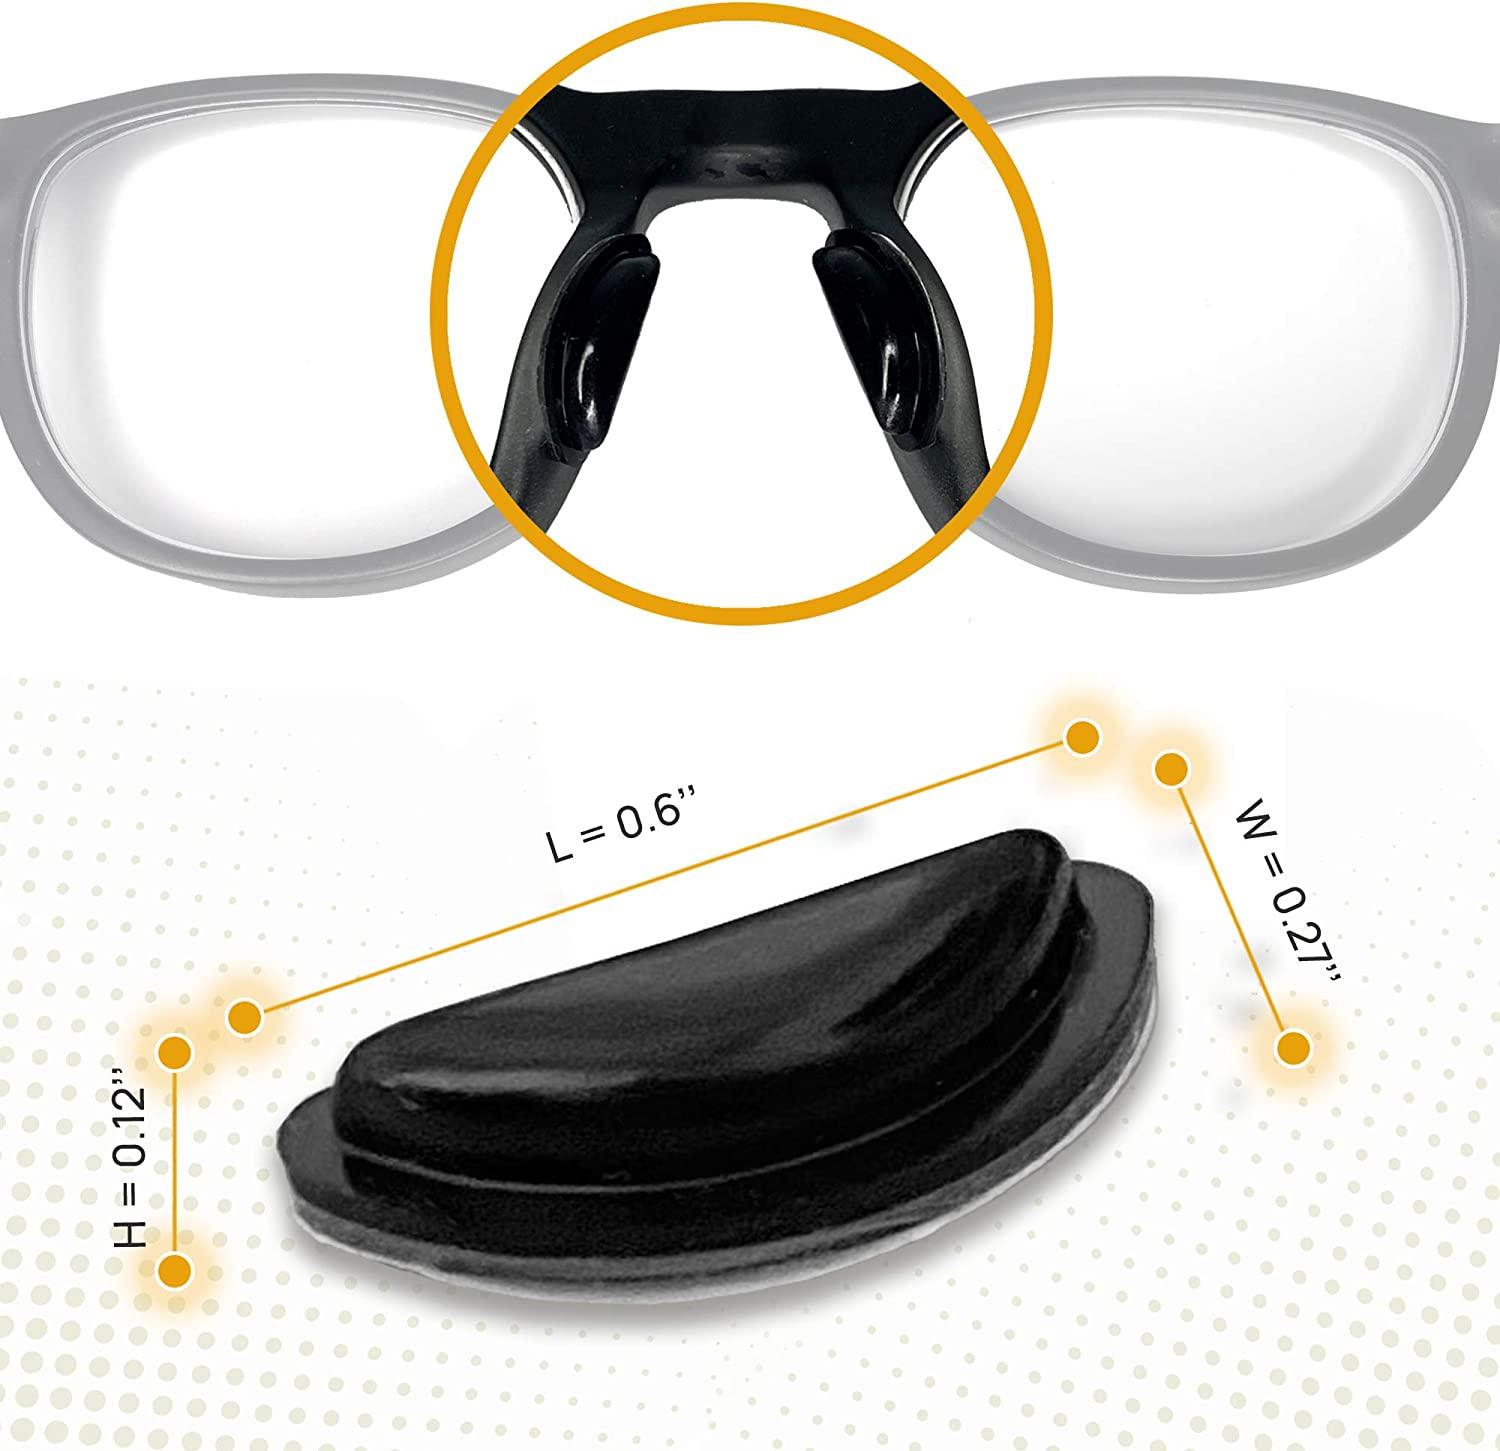 Eye Glasses Nose Support Pads - Adhesive Anti Slip Eyeglasses Nose Grips 10  Pairs(Black)